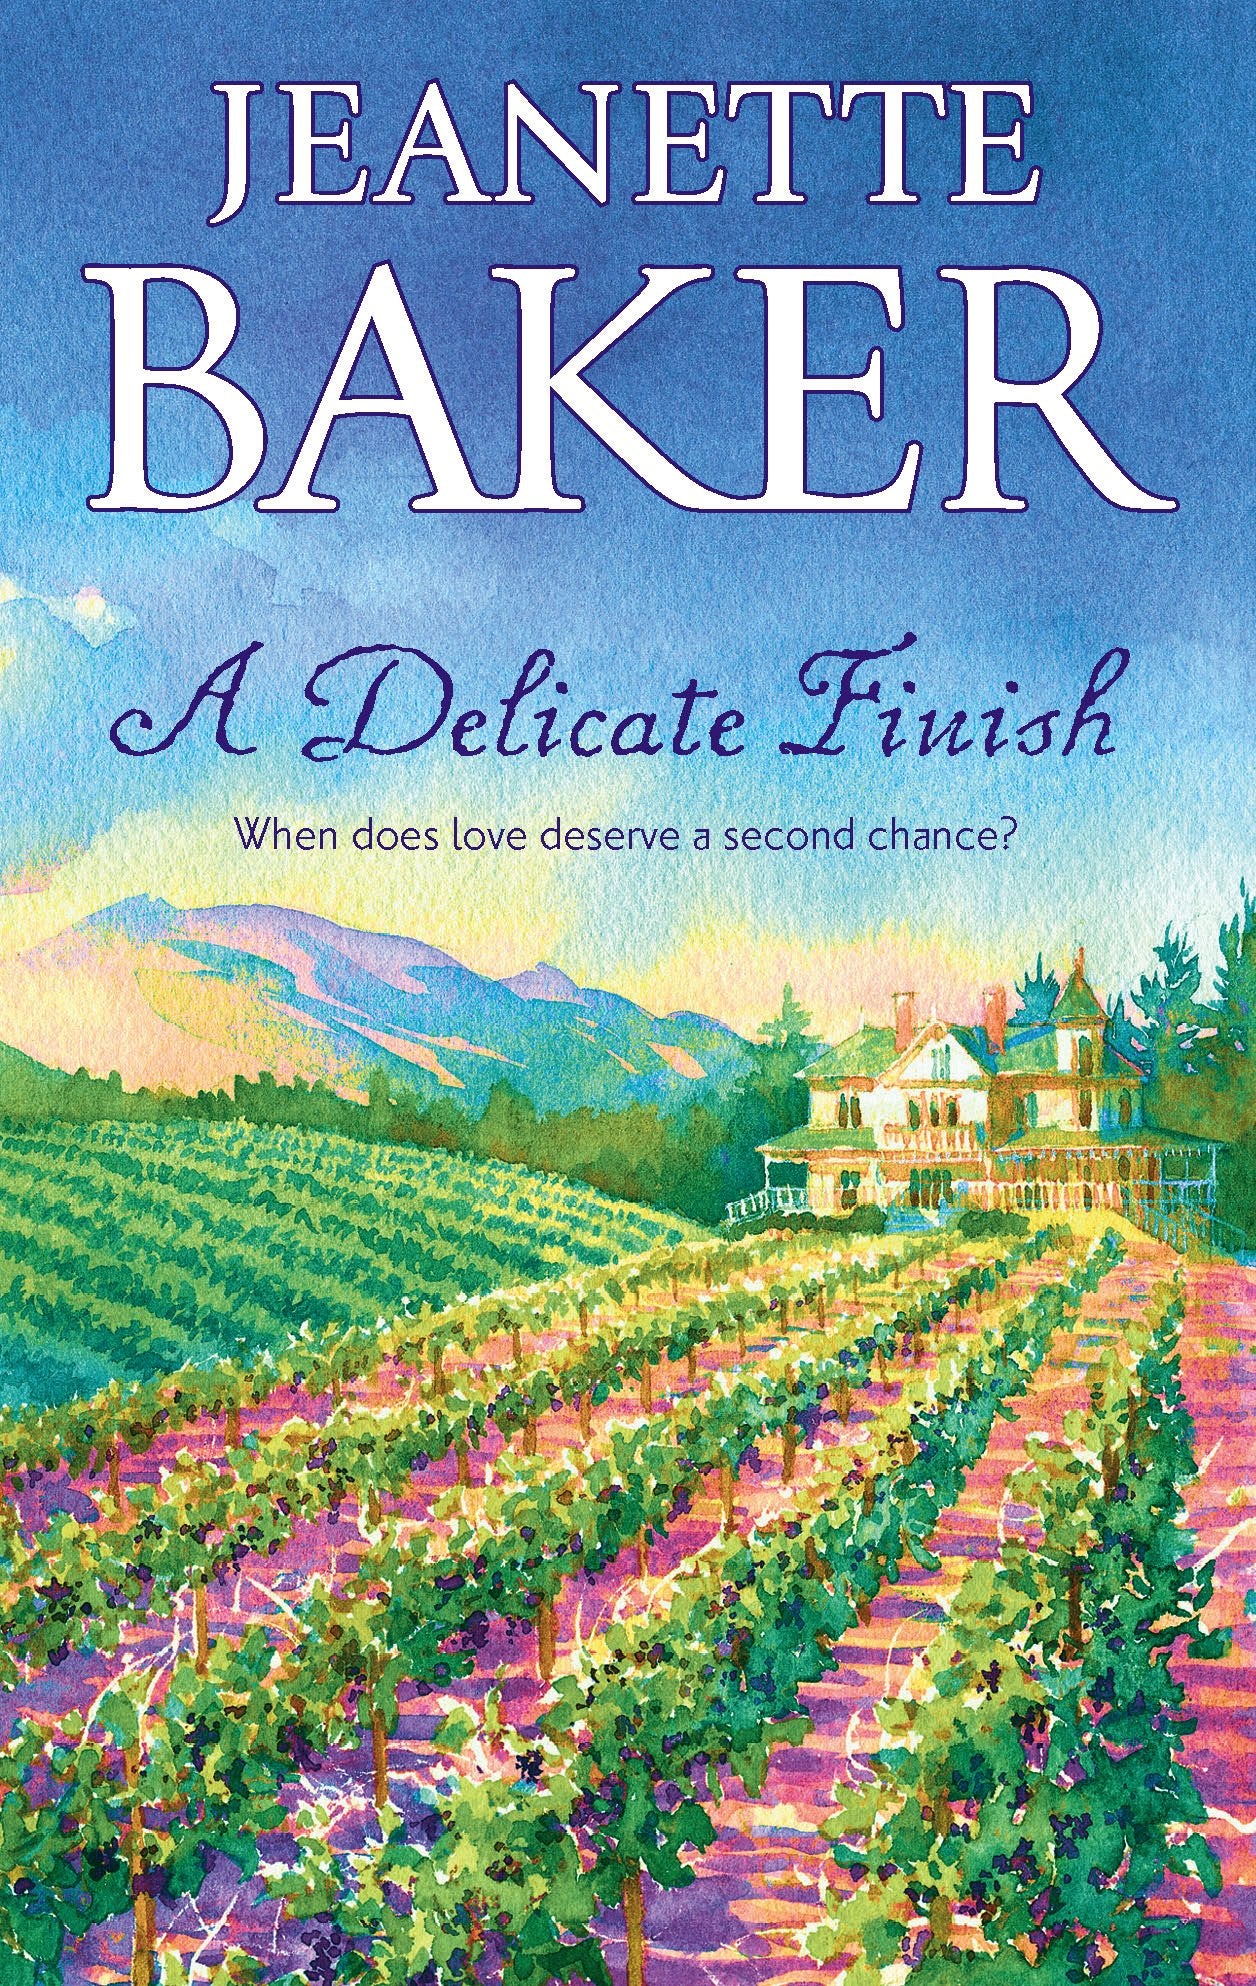 Livre ISBN 0778321827 A Delicate Finish : When does love deserve a second chance ? (Janette Baker)